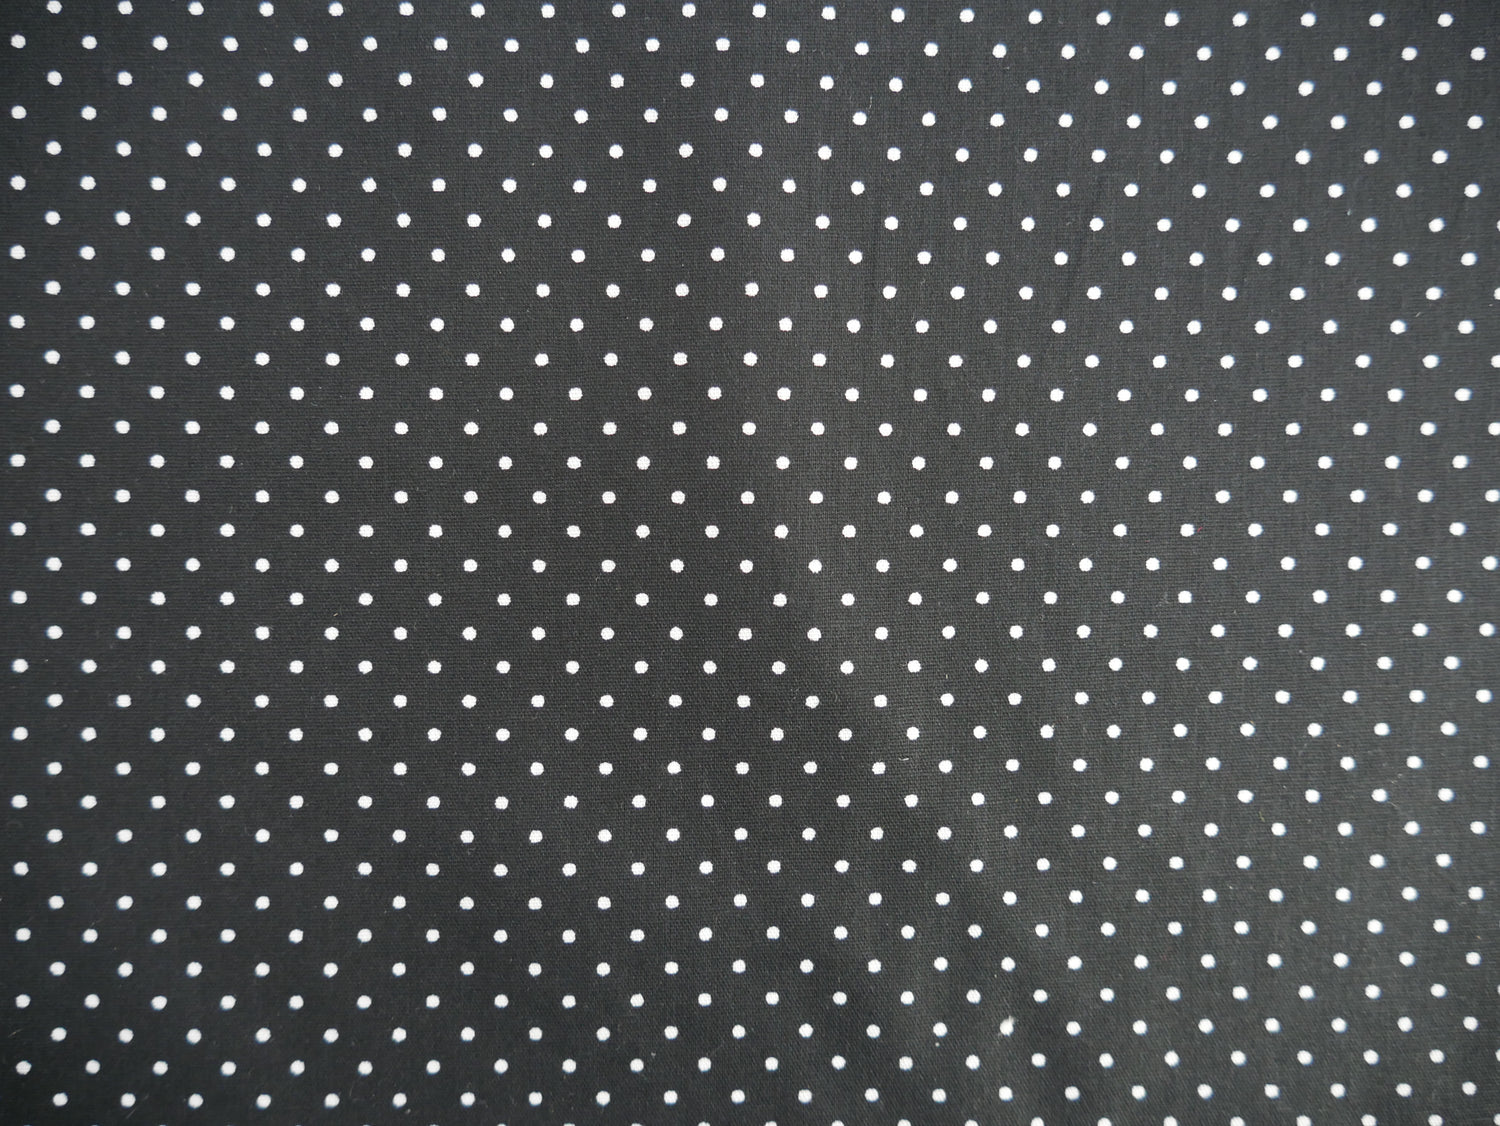 Pin-Spot Printed Cotton, Black £8.50 p/m-Fabric-Flying Bobbins Haberdashery